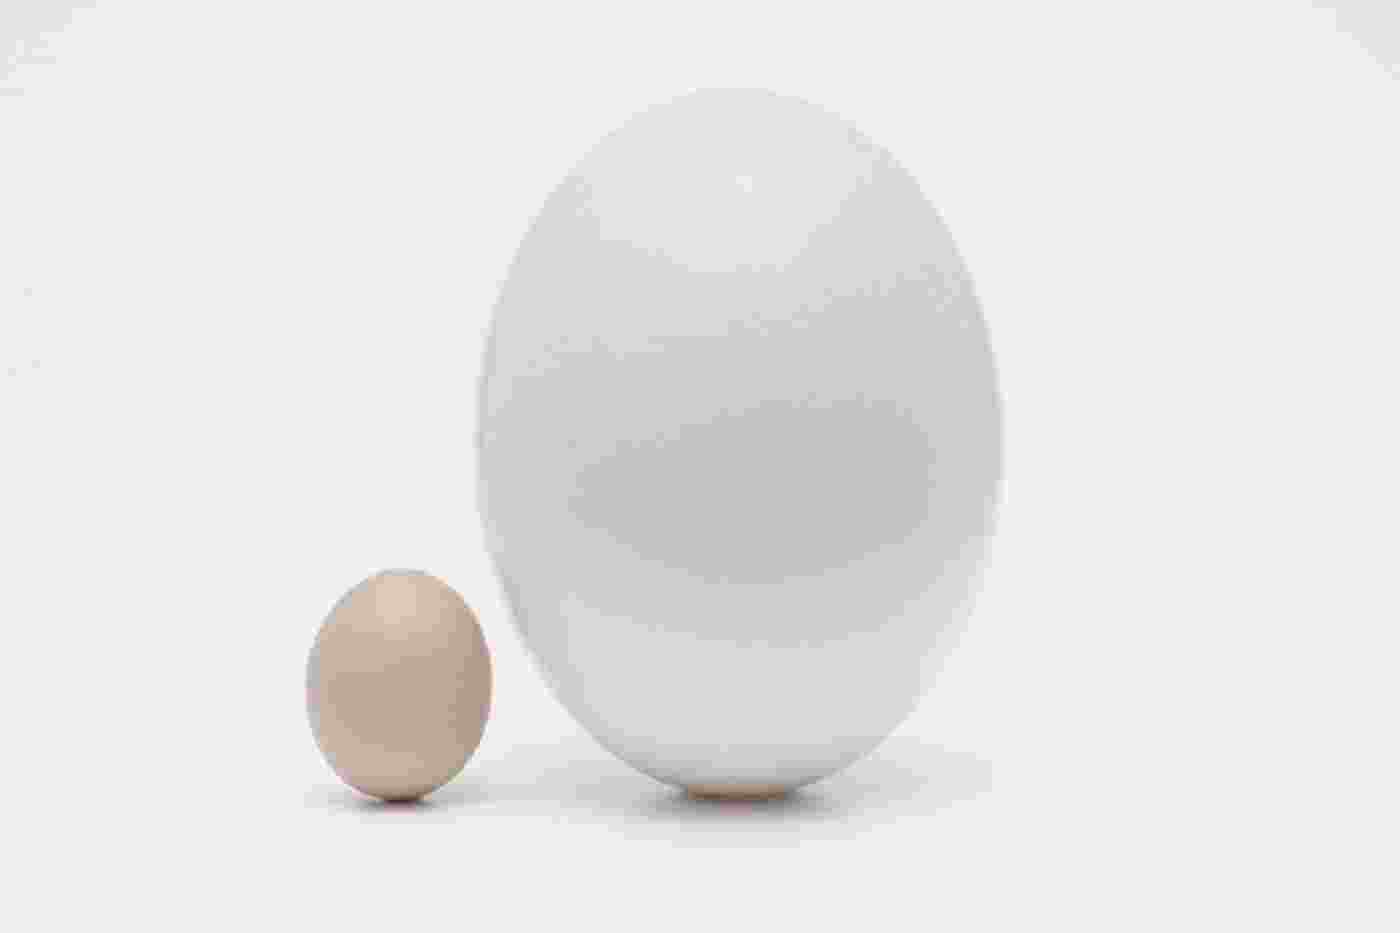 Eggs1